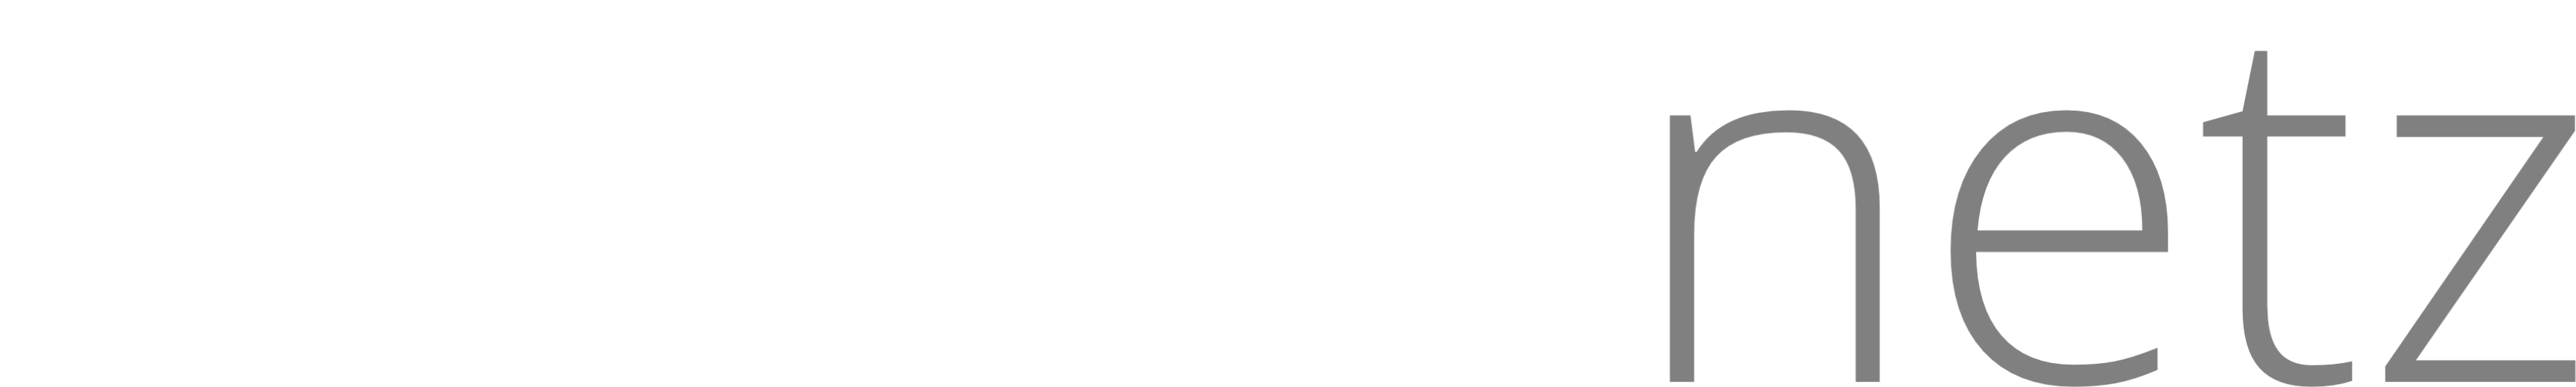 TECHNIKNETZ_Logo_HD